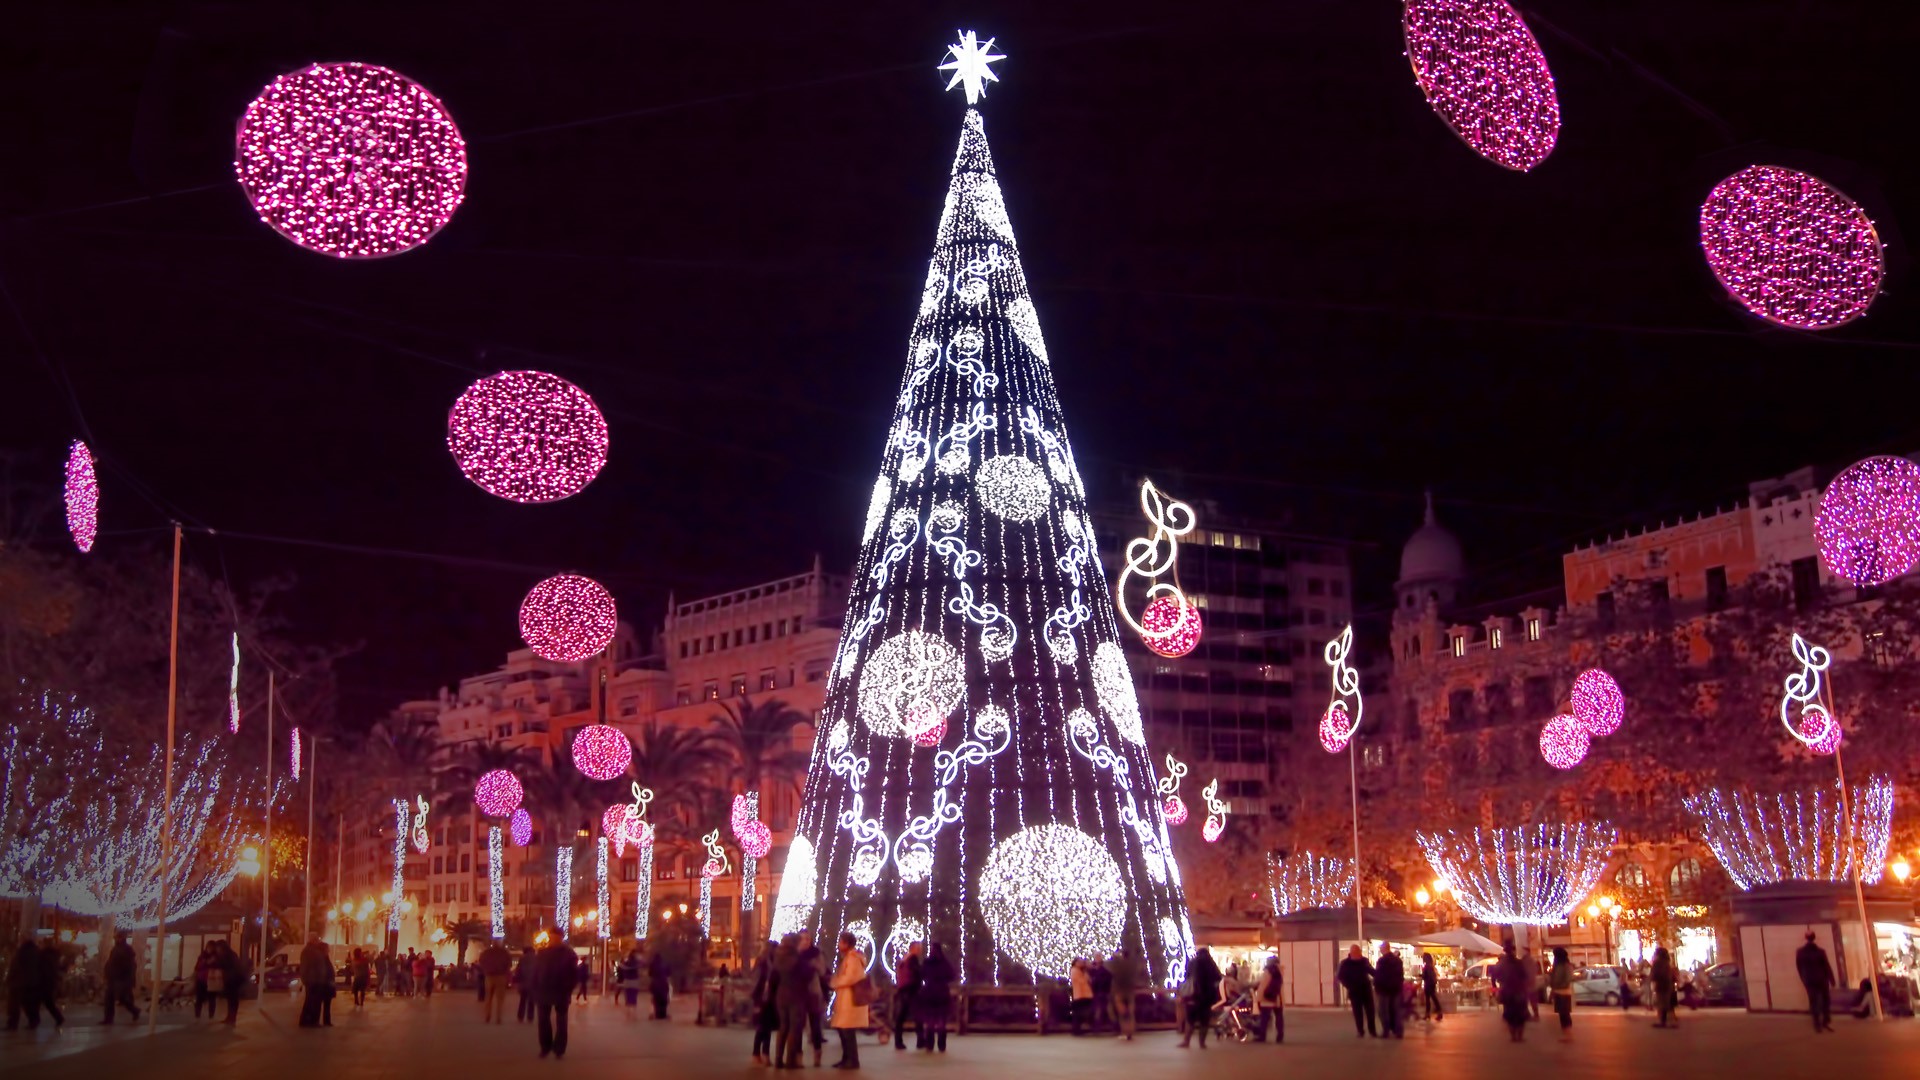 Christmas decoration and illumination in Valencia, Spain | Windows ...